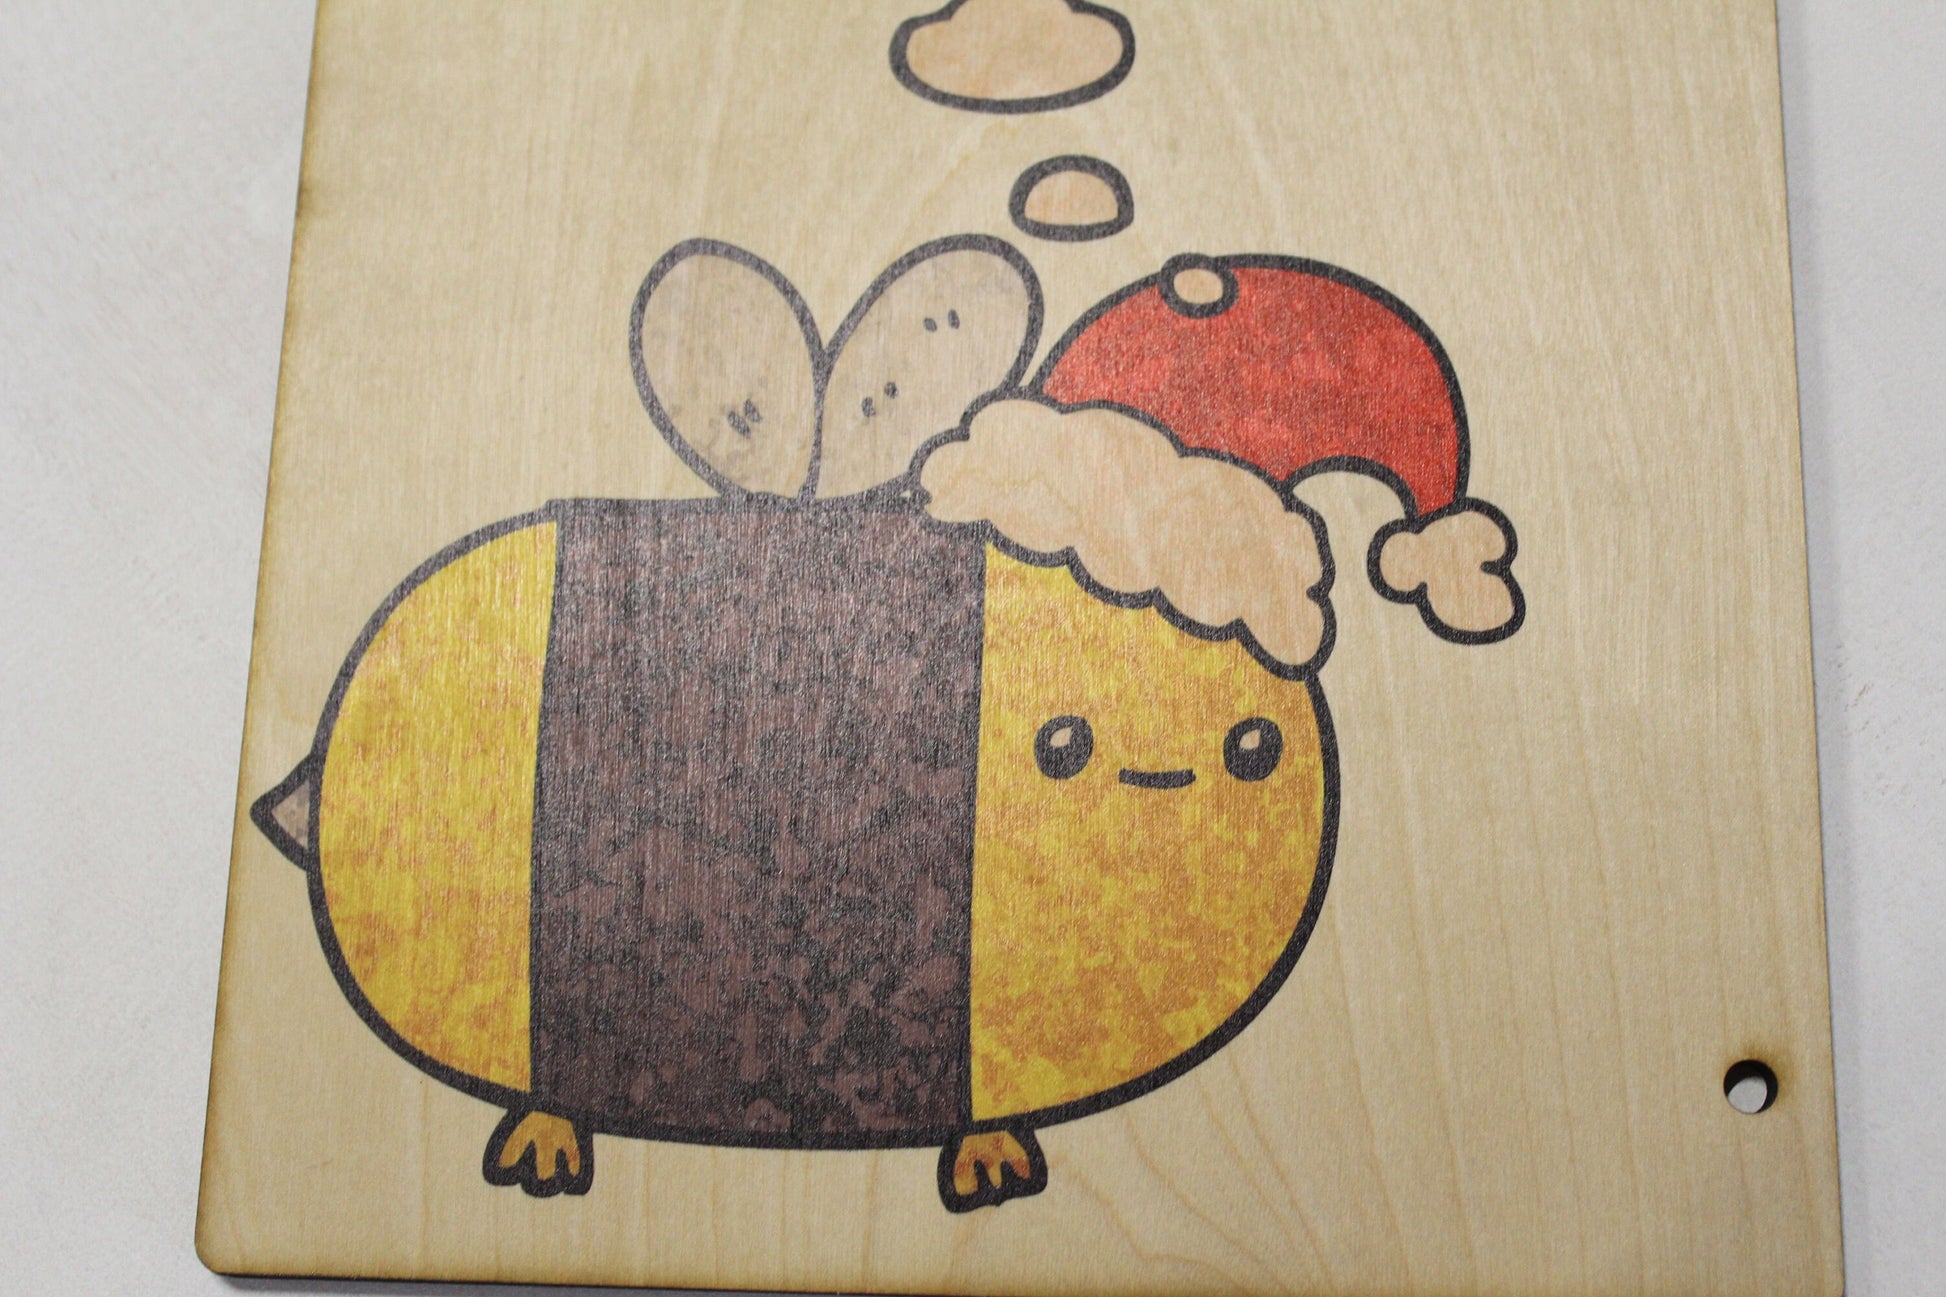 Bee Happy Bumble Bee Honey Bee Merry Christmas Rustic Wooden Sign Wall Decor Art Plaque Wood Print Sketch Drawing Santa Bee